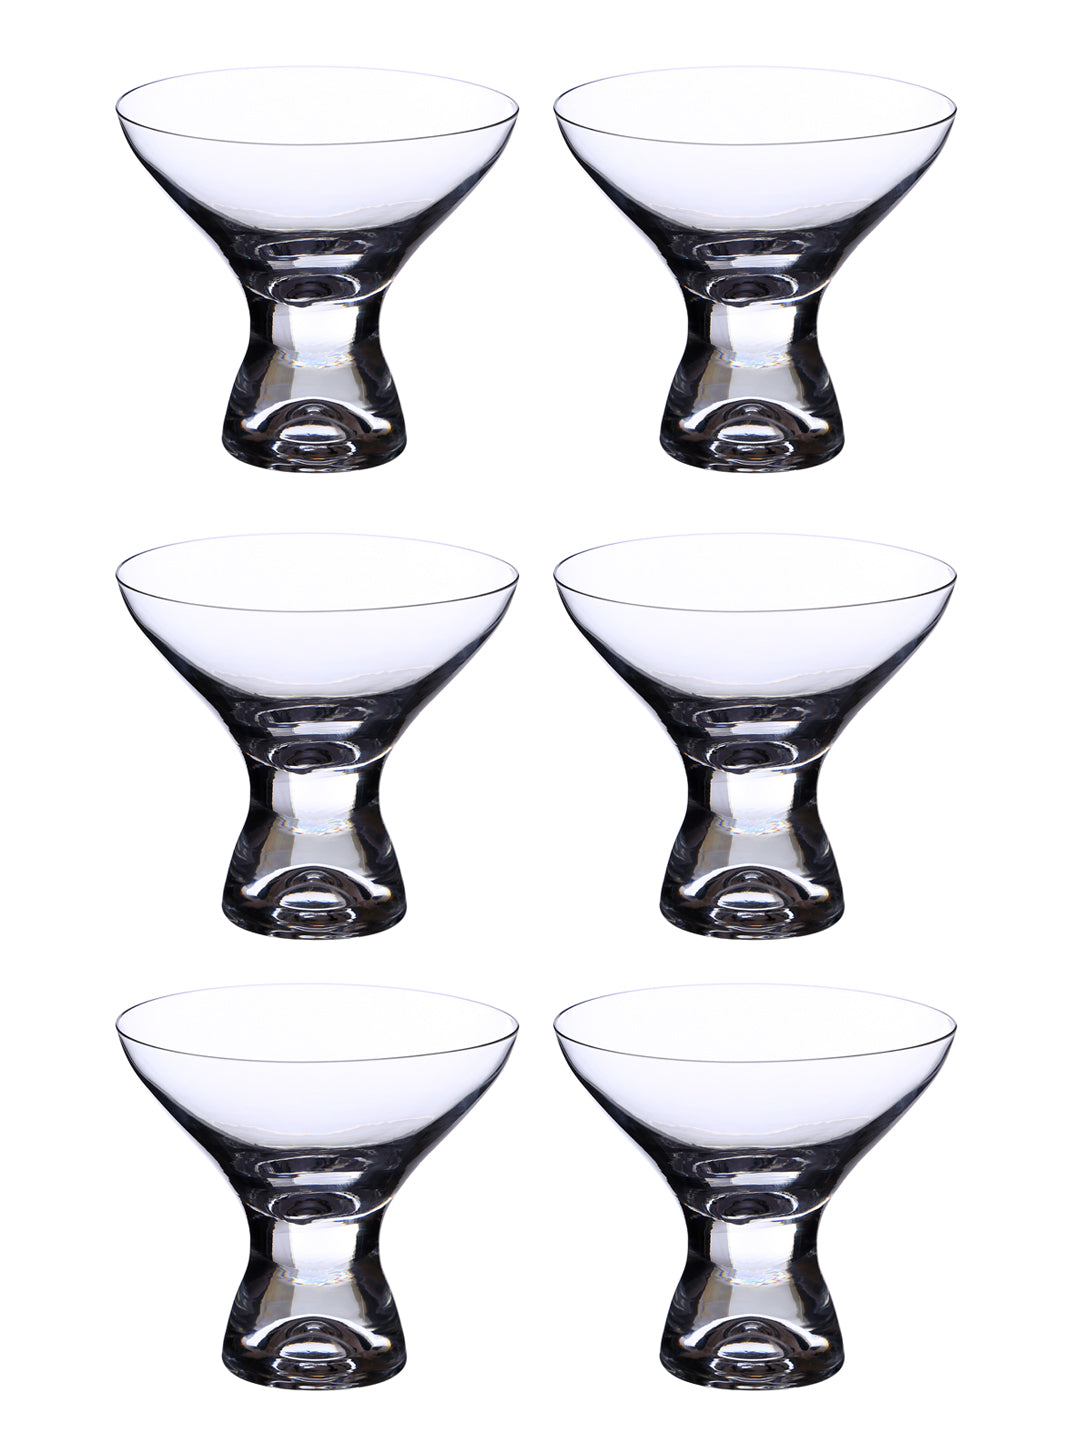 Bohemia Crystal Samba Ice Cream Cup Set, 330ml, Set of 6pcs, Transparent, Non Lead Crystal Glass